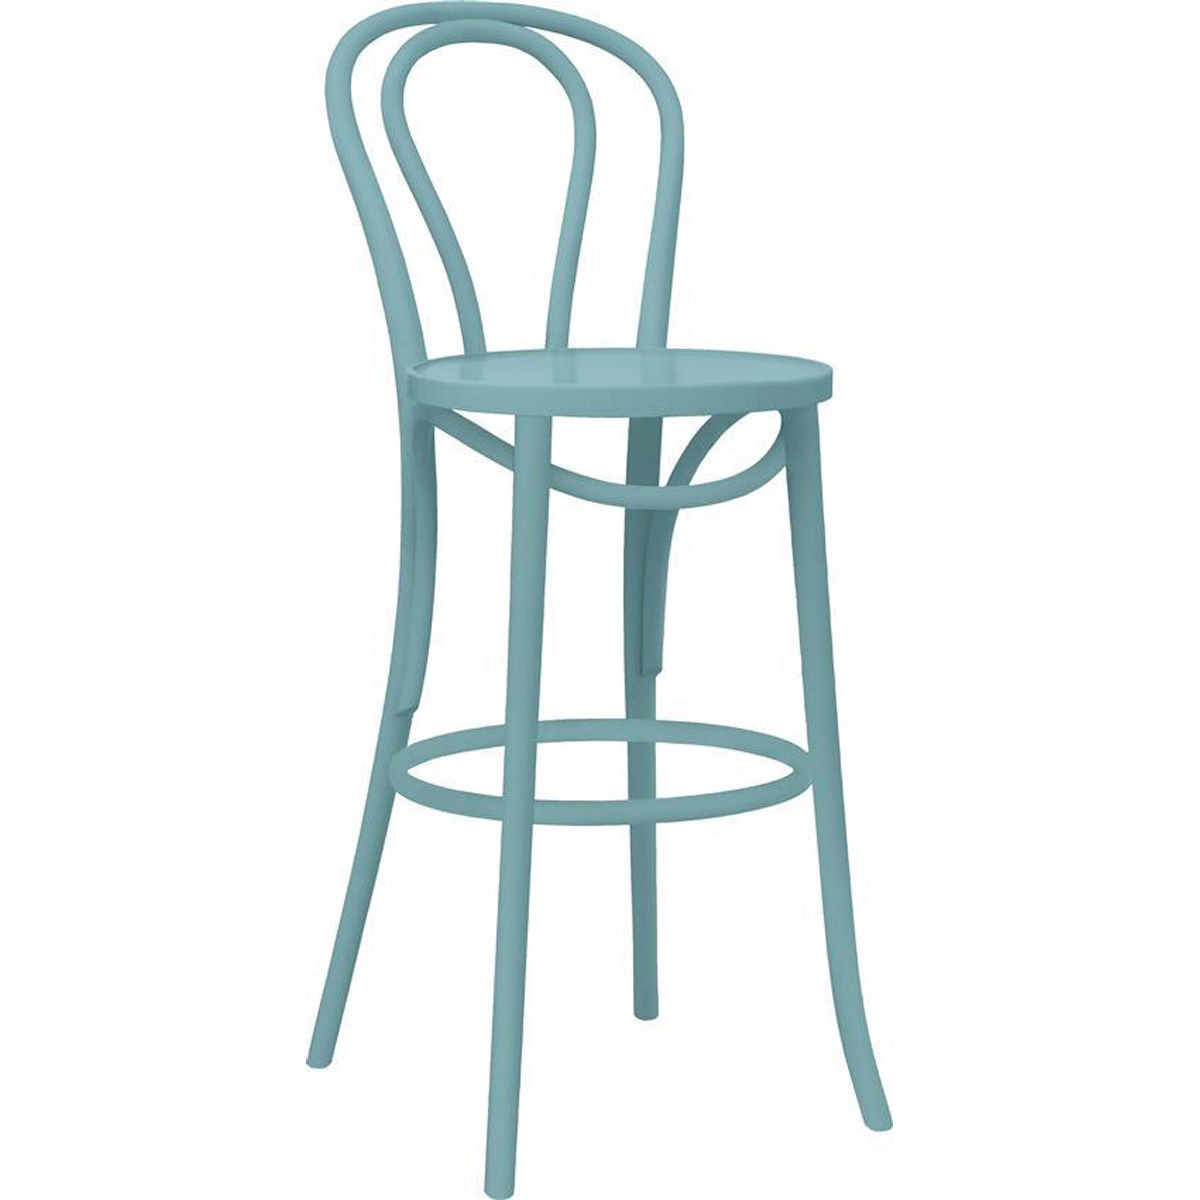 WINNIE barstol med sædehøjde 75cm - Blå lak